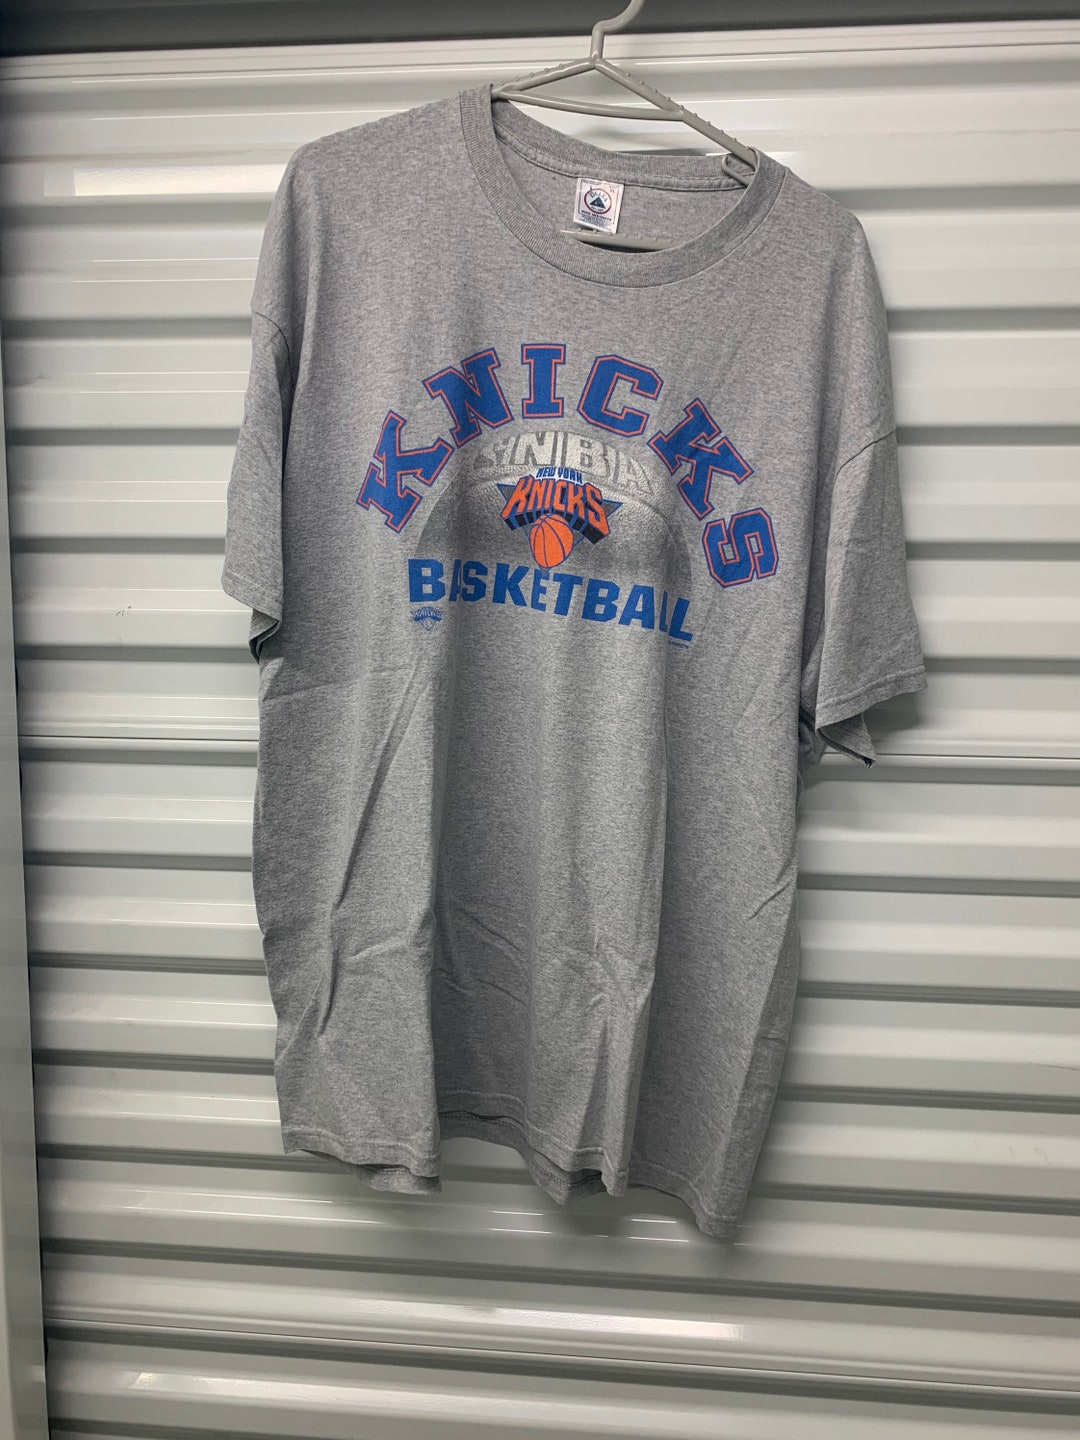 Knicks Shirt Knicks Vintage New York Knicks T Shirt 90s NBA Vintage  Activewear by Logo 7 Mens Size S-M